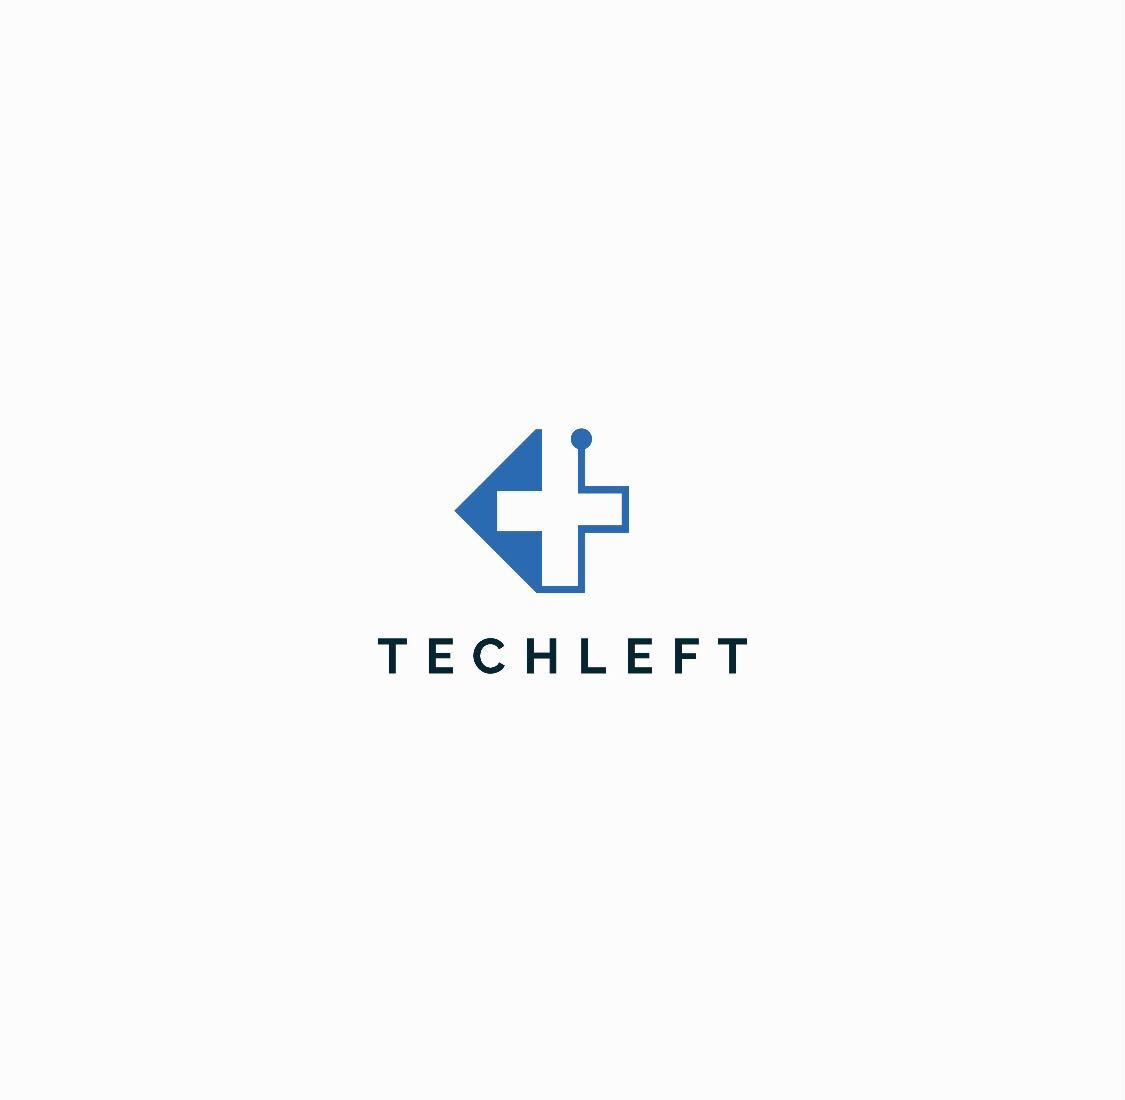 Techleft logo.png